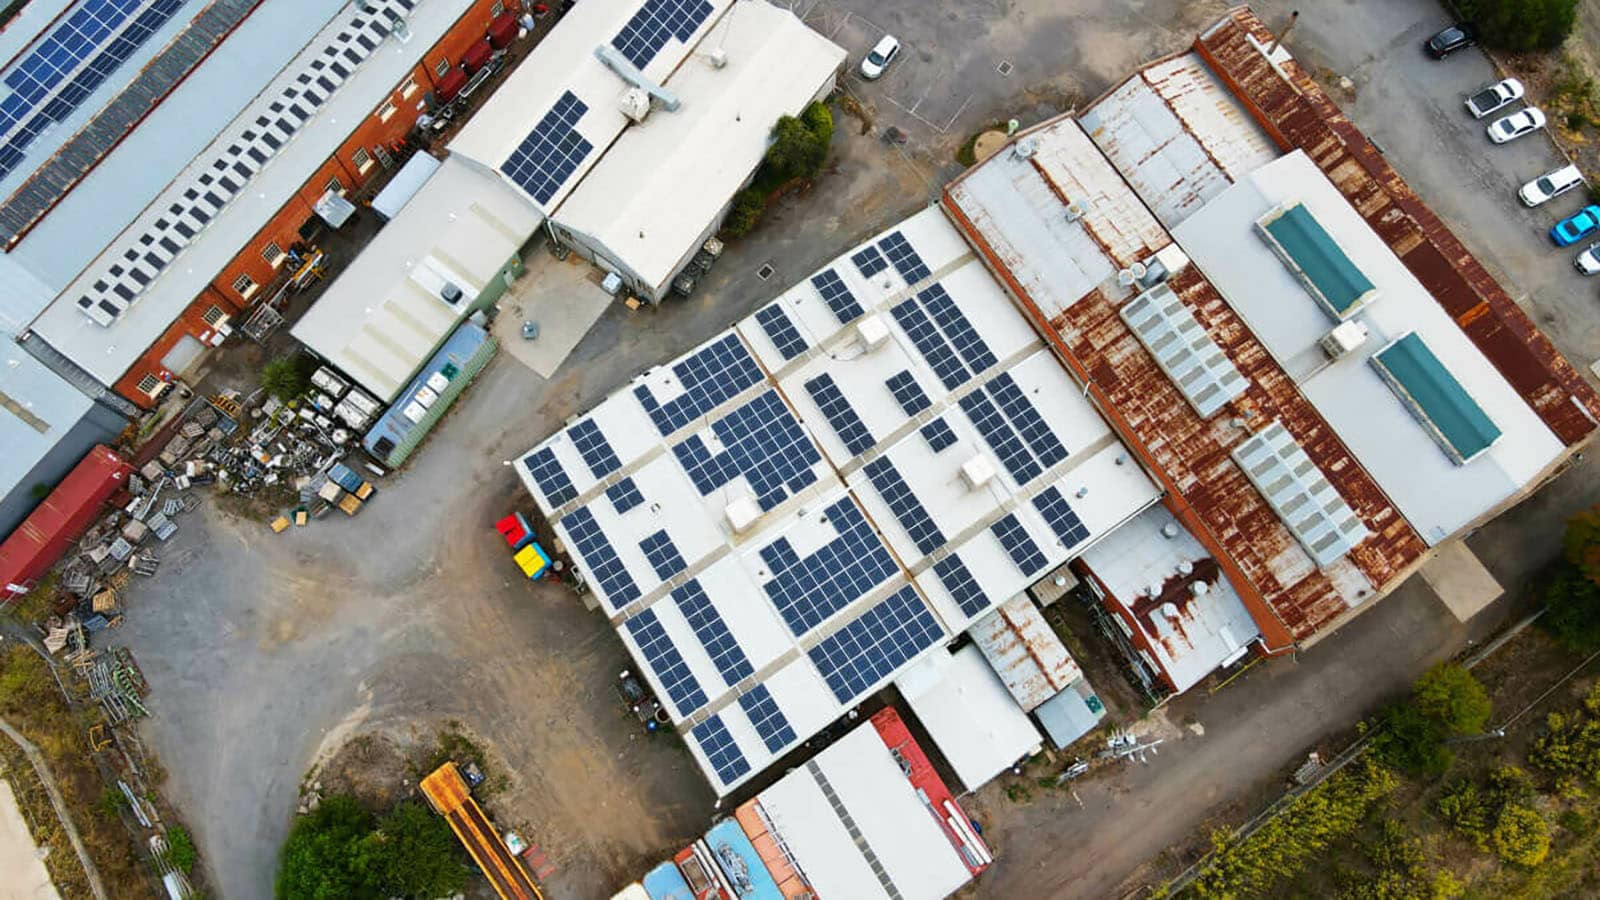 Aerial image of historic Bendigo Woollen Mills factory with solar panels on roof.